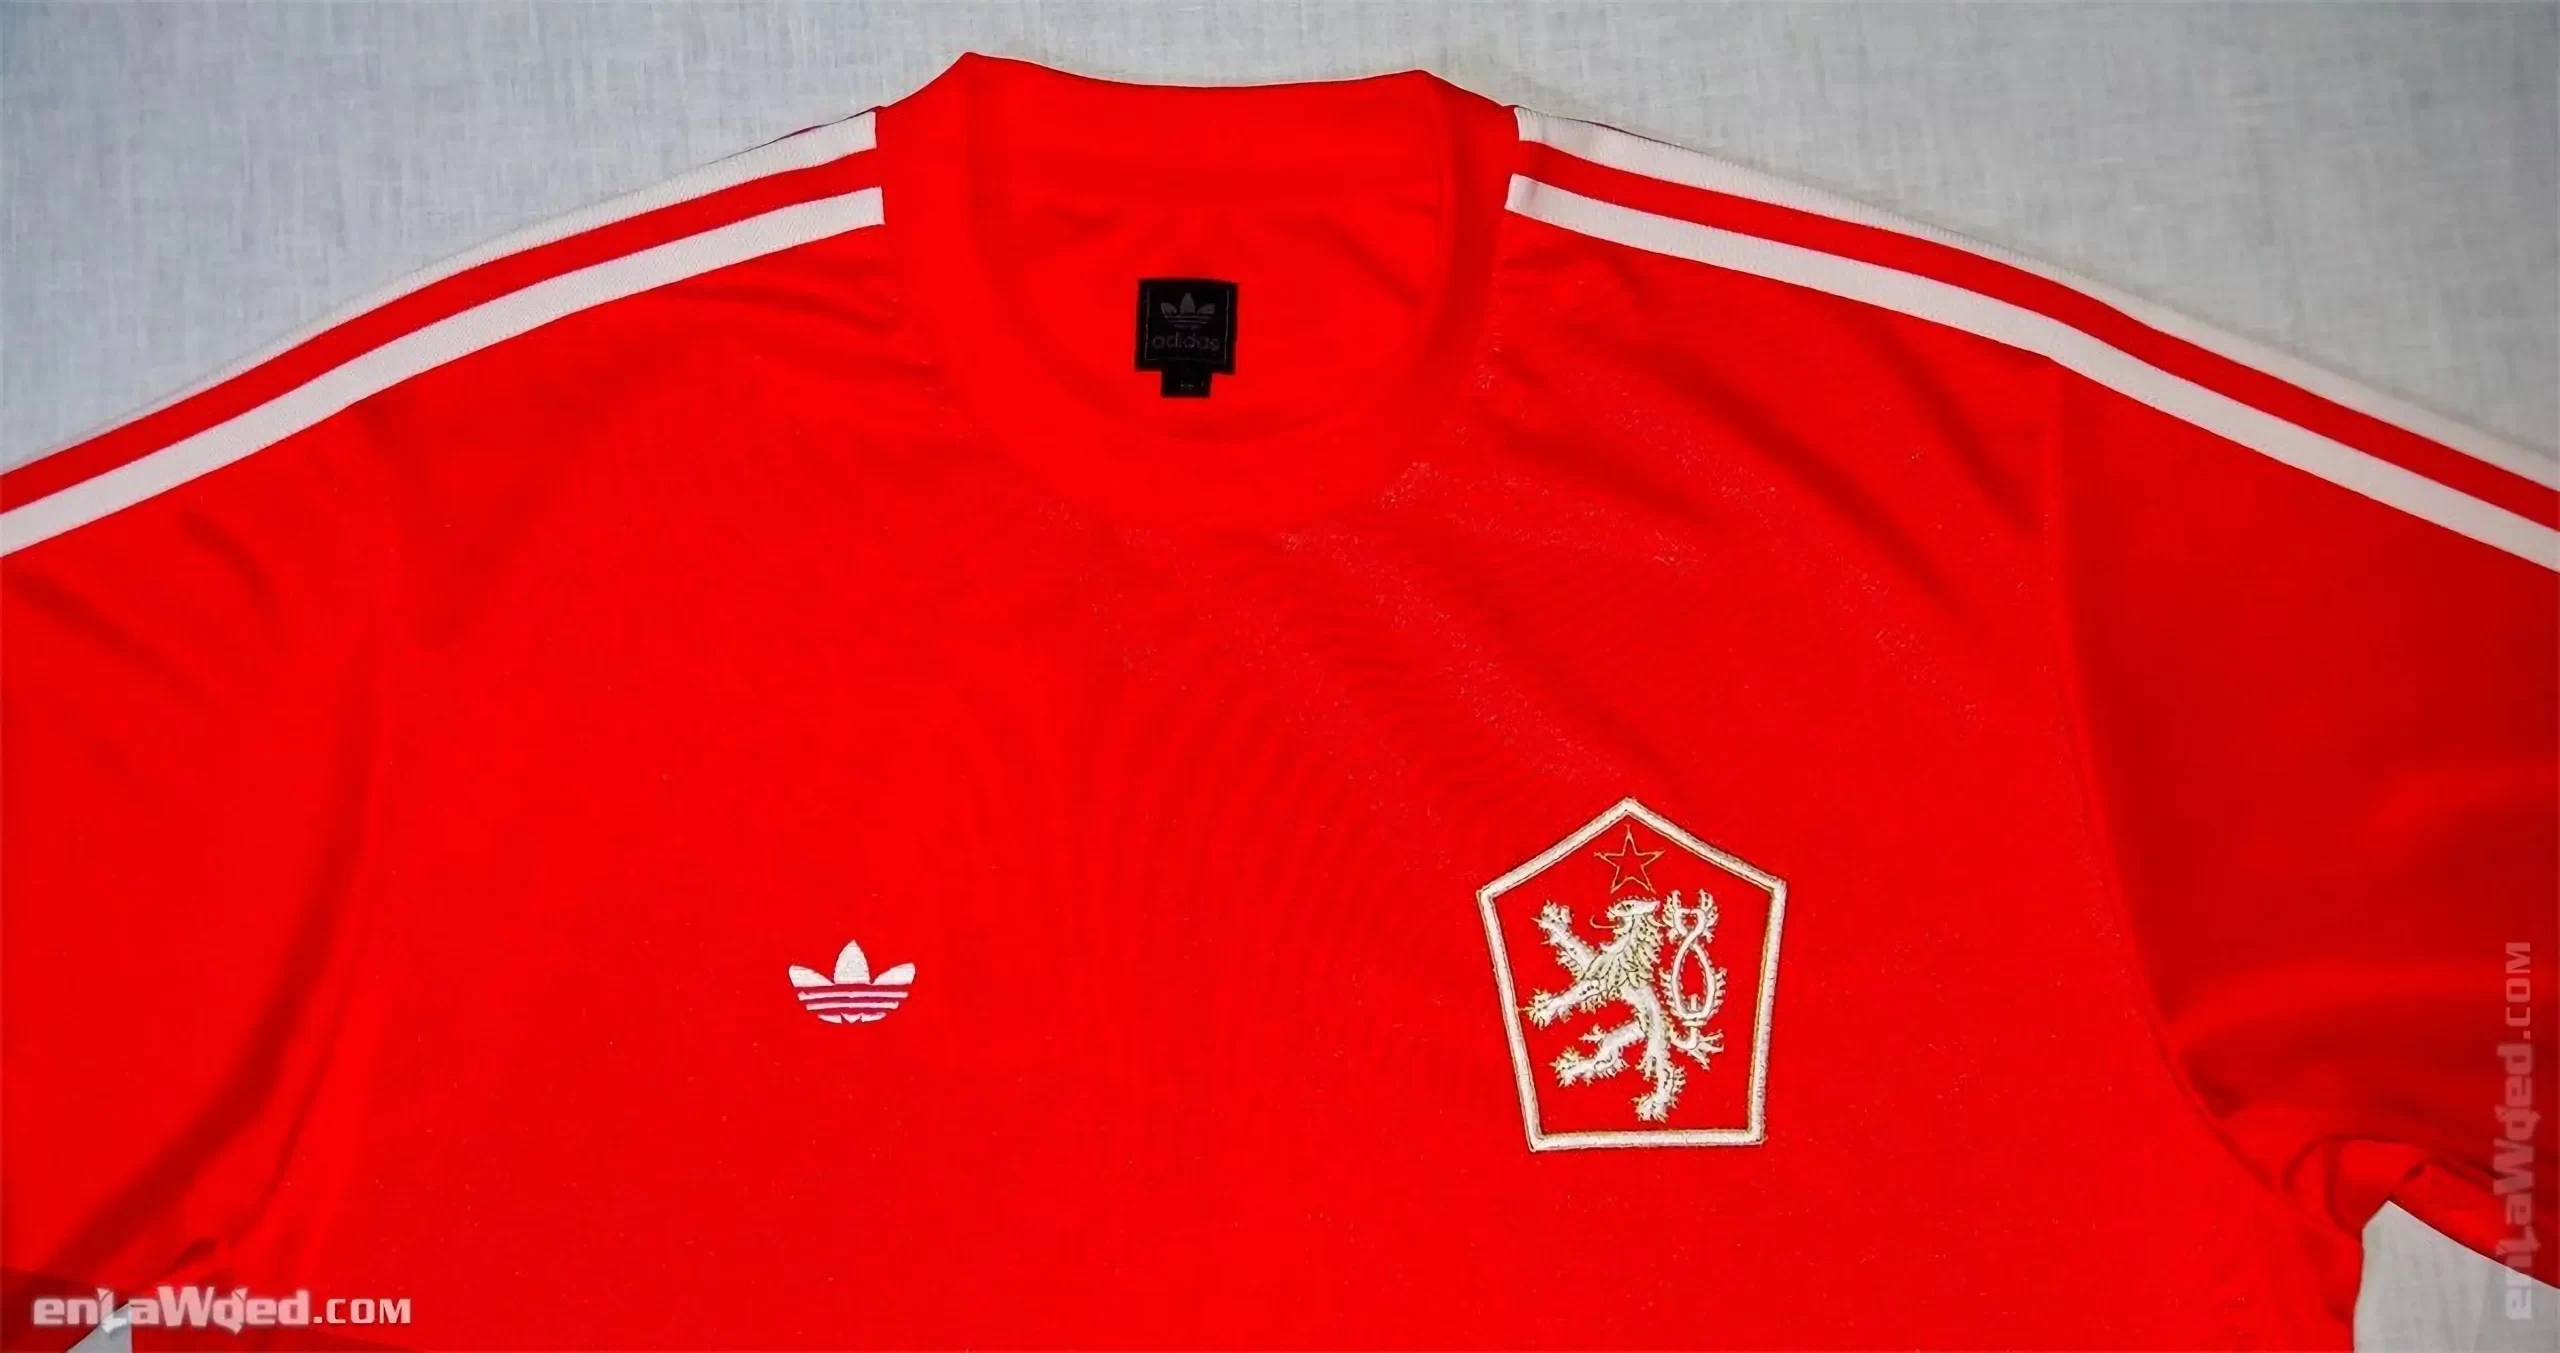 Men’s 2006 Panenka ’76 Czechoslovakia Jersey by Adidas: Reliable (EnLawded.com file #lmcf9wtdg37lungi36p)